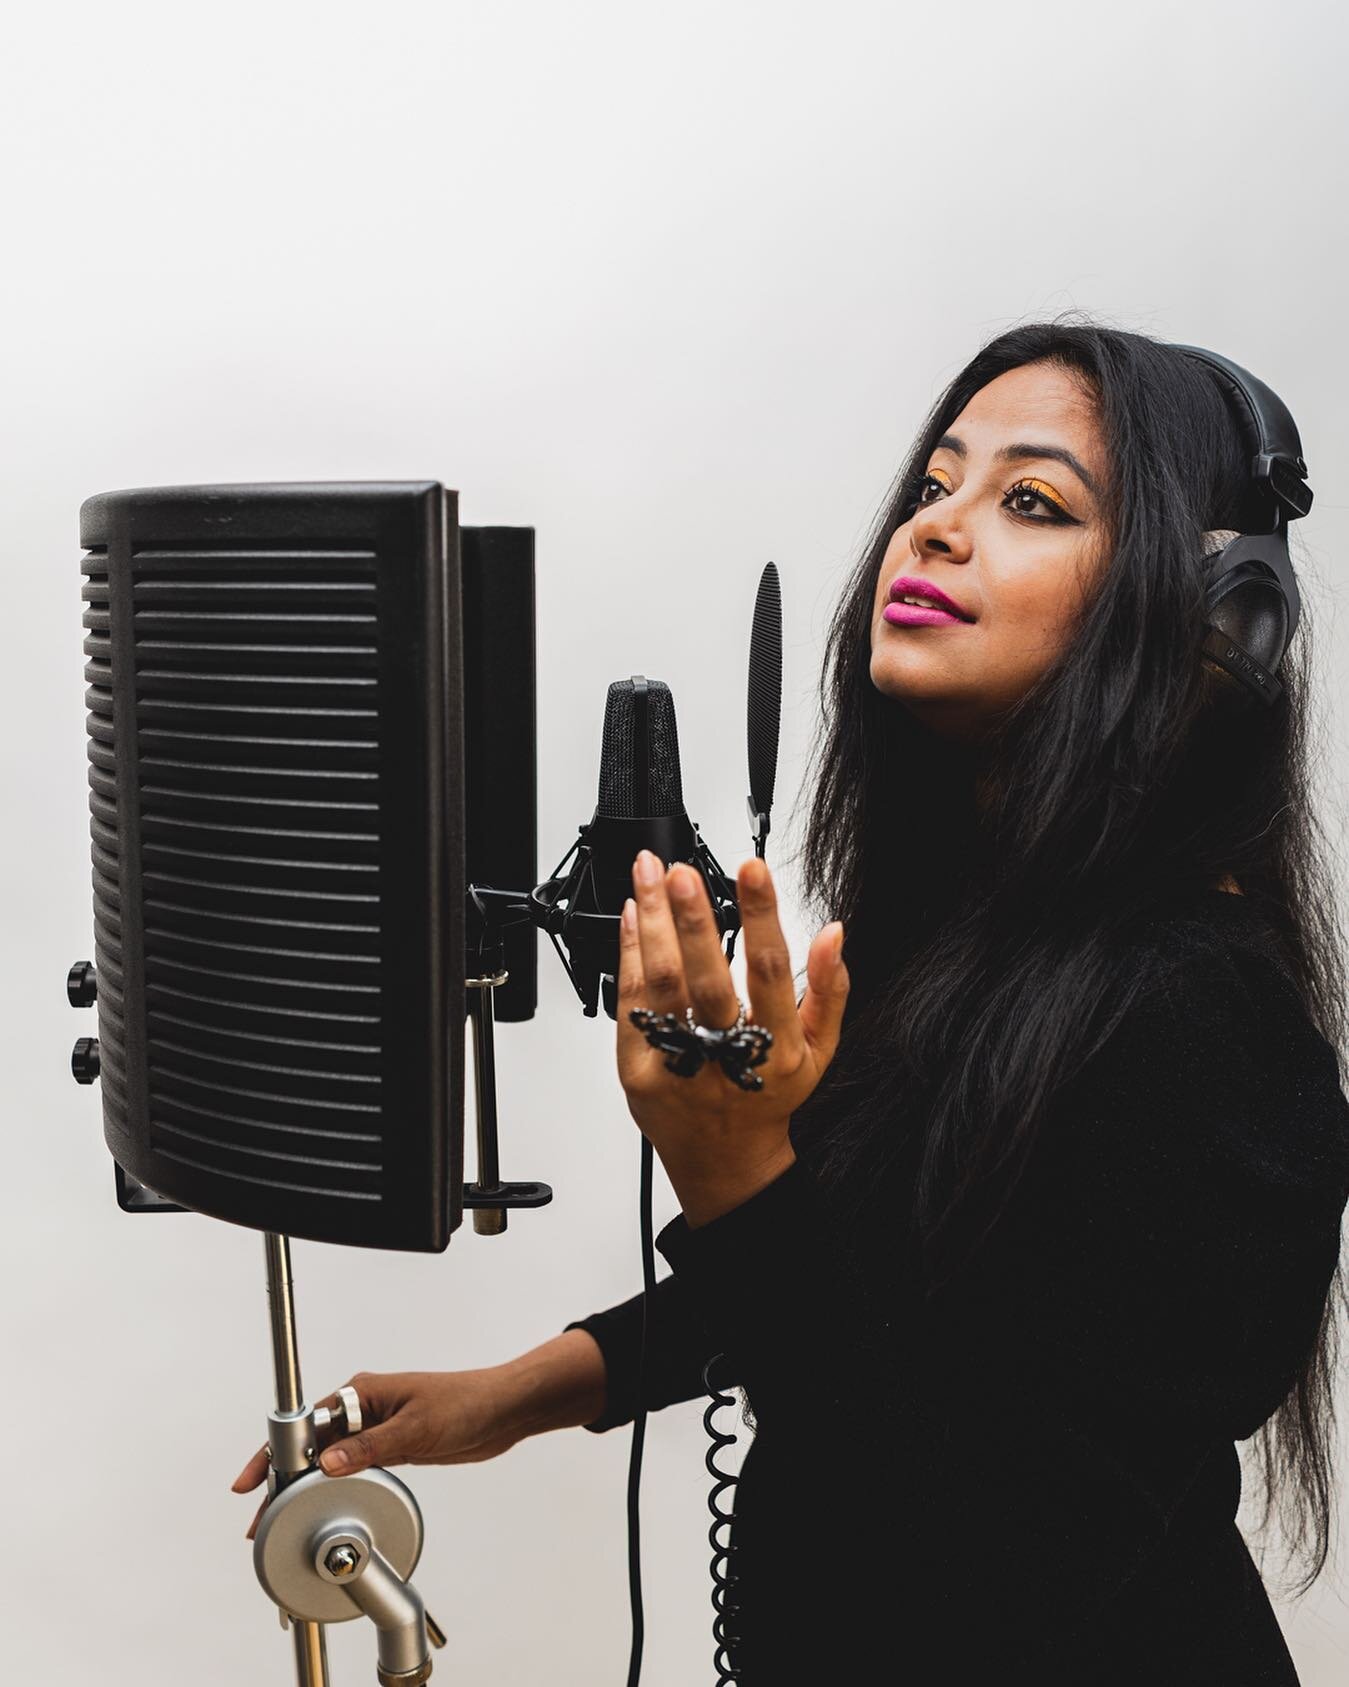 A lot of music work at Tru Studio. Recording vocals with 
singer @nabanitanandyghosh 

Make sure you stay tuned for music video. 

@presonus @studioonetips #presonus #audio #faderport #studioshot